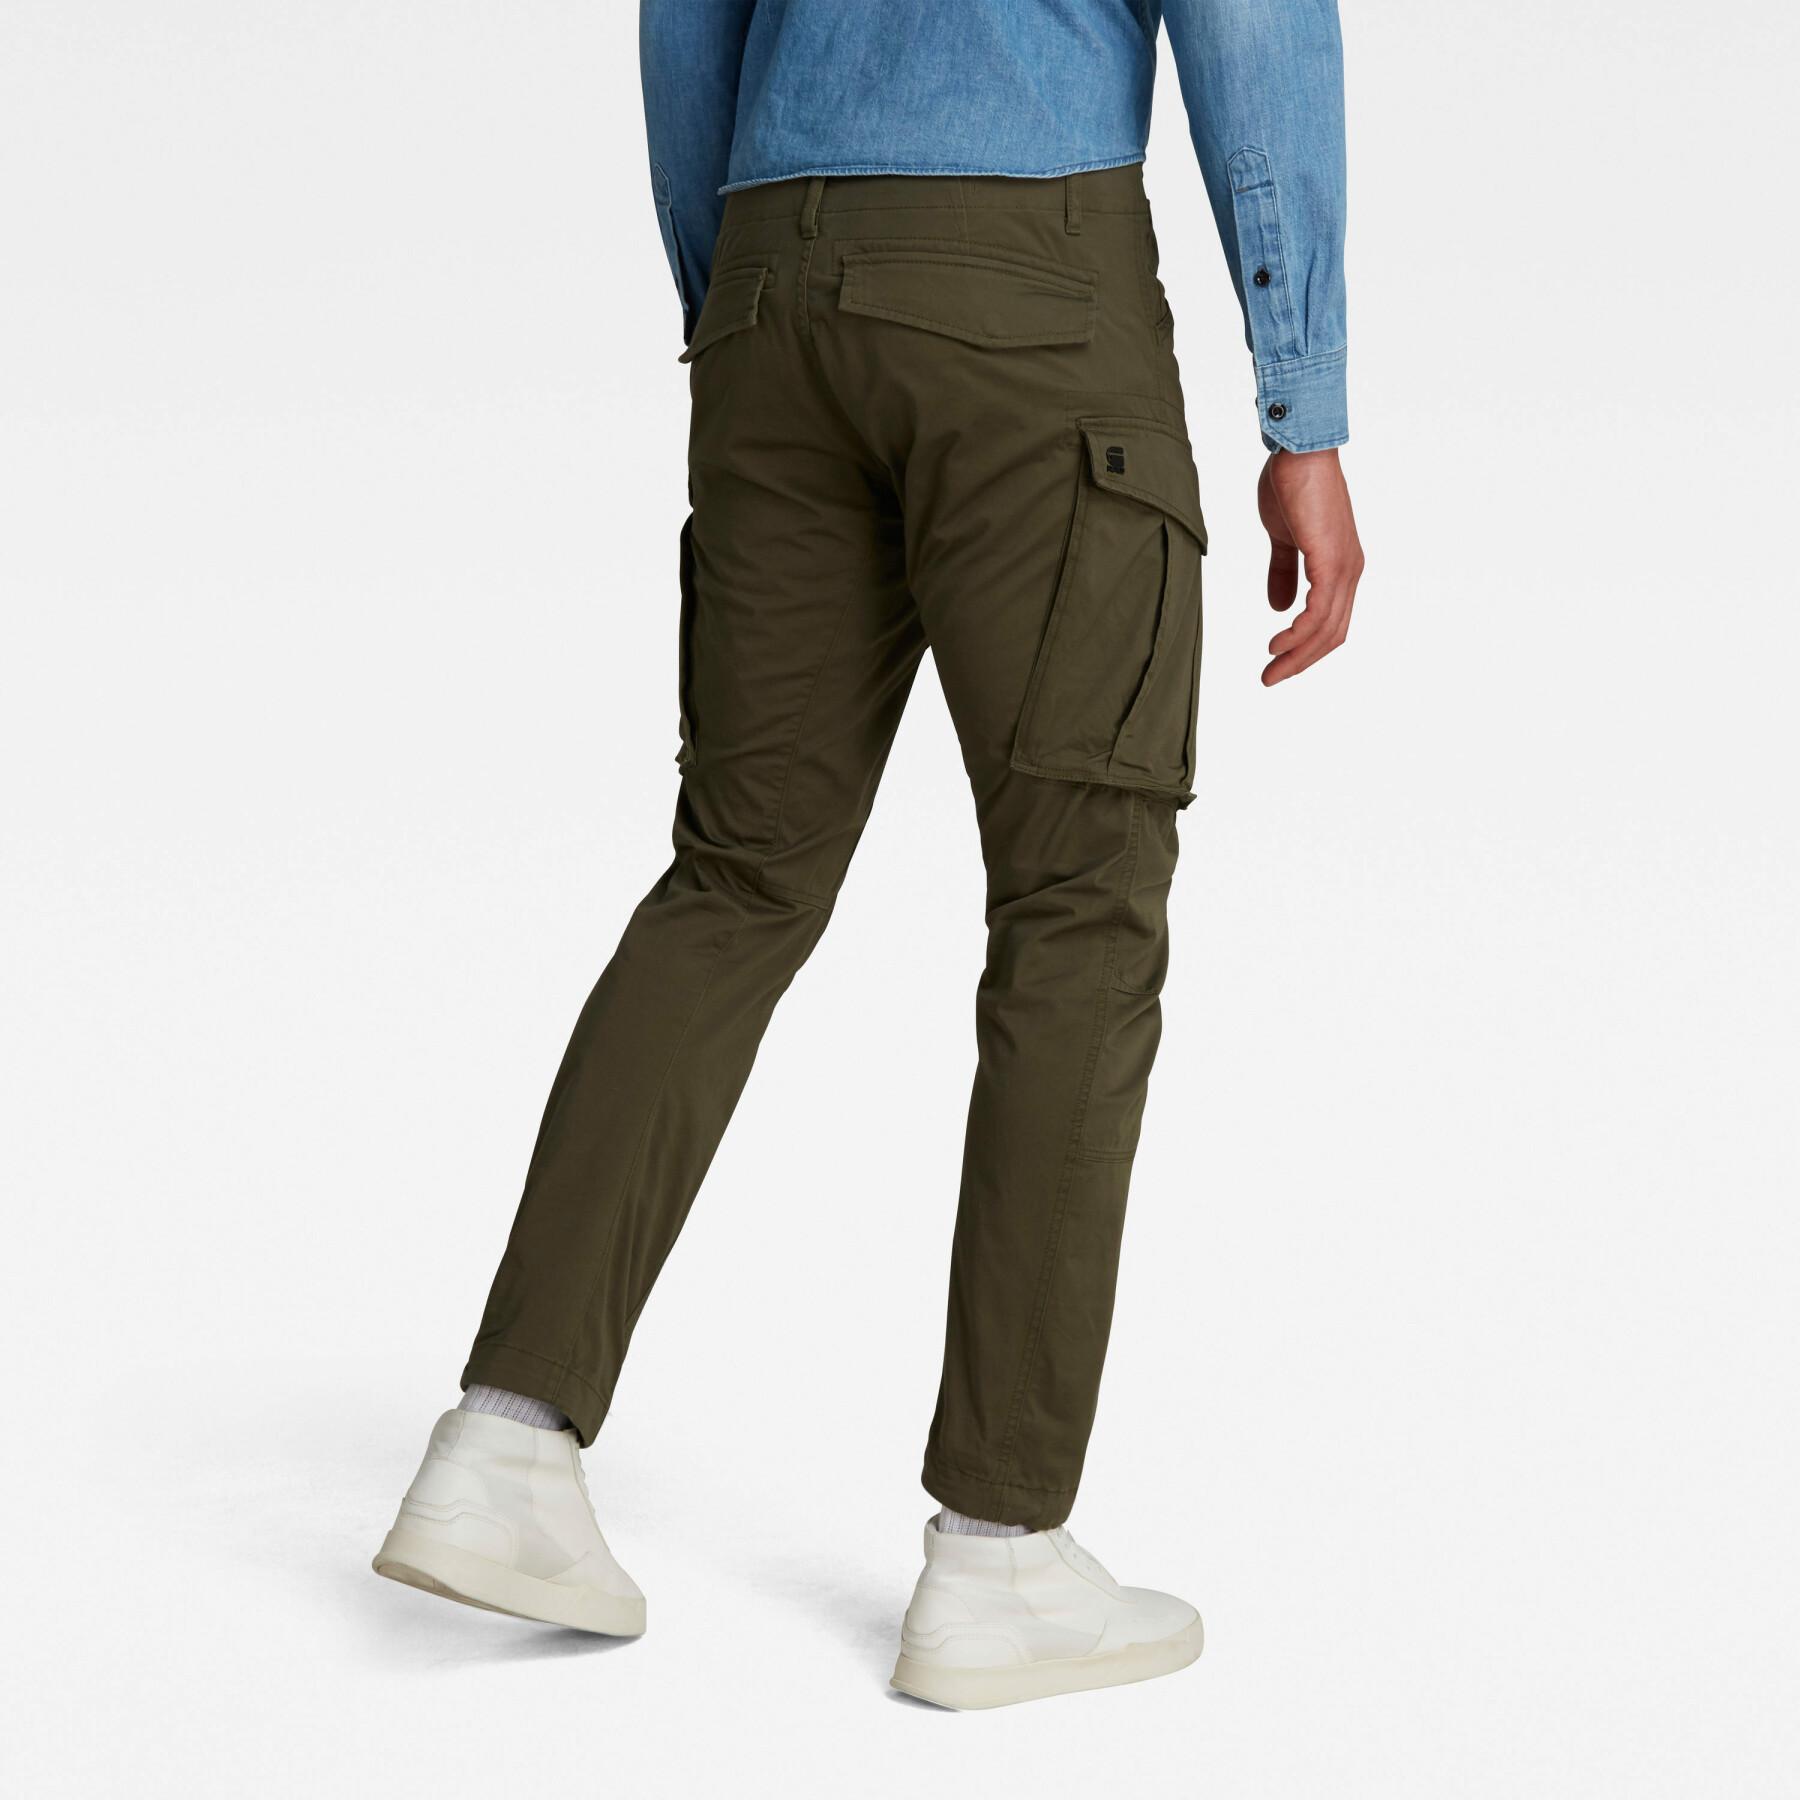 Pants G-Star Rovic zip 3d regular tapered